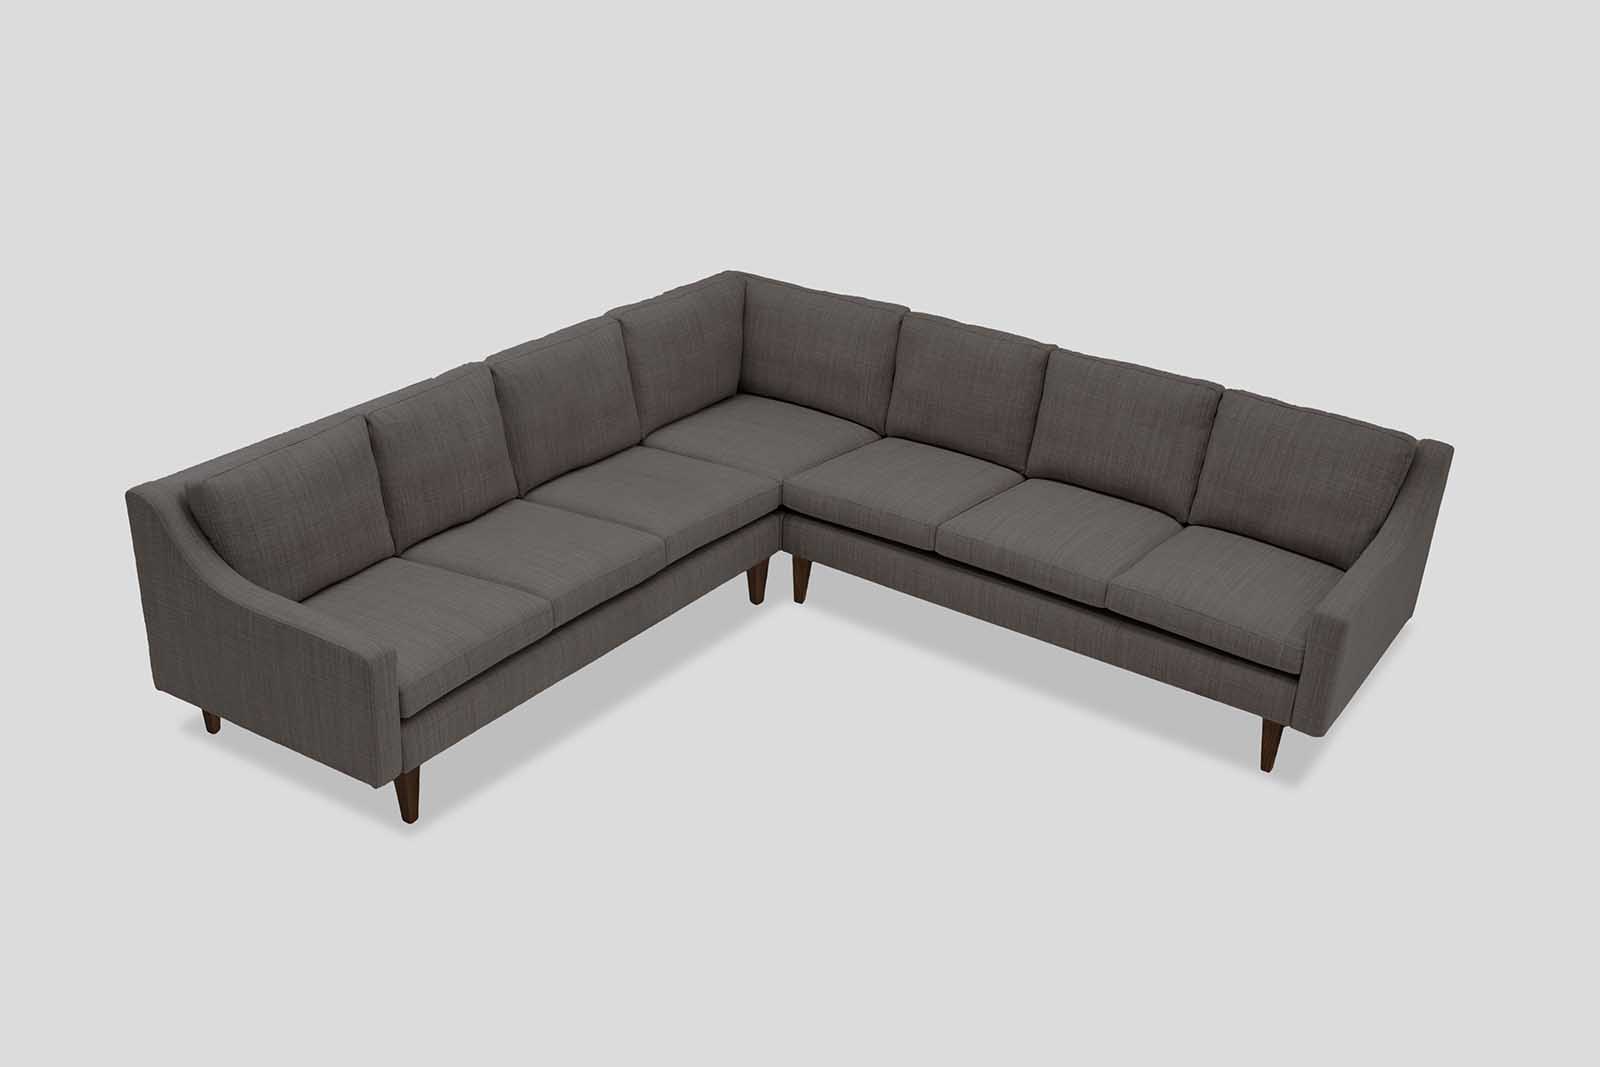 HB02-large-corner-sofa-seal-3x3-overhead-treacle